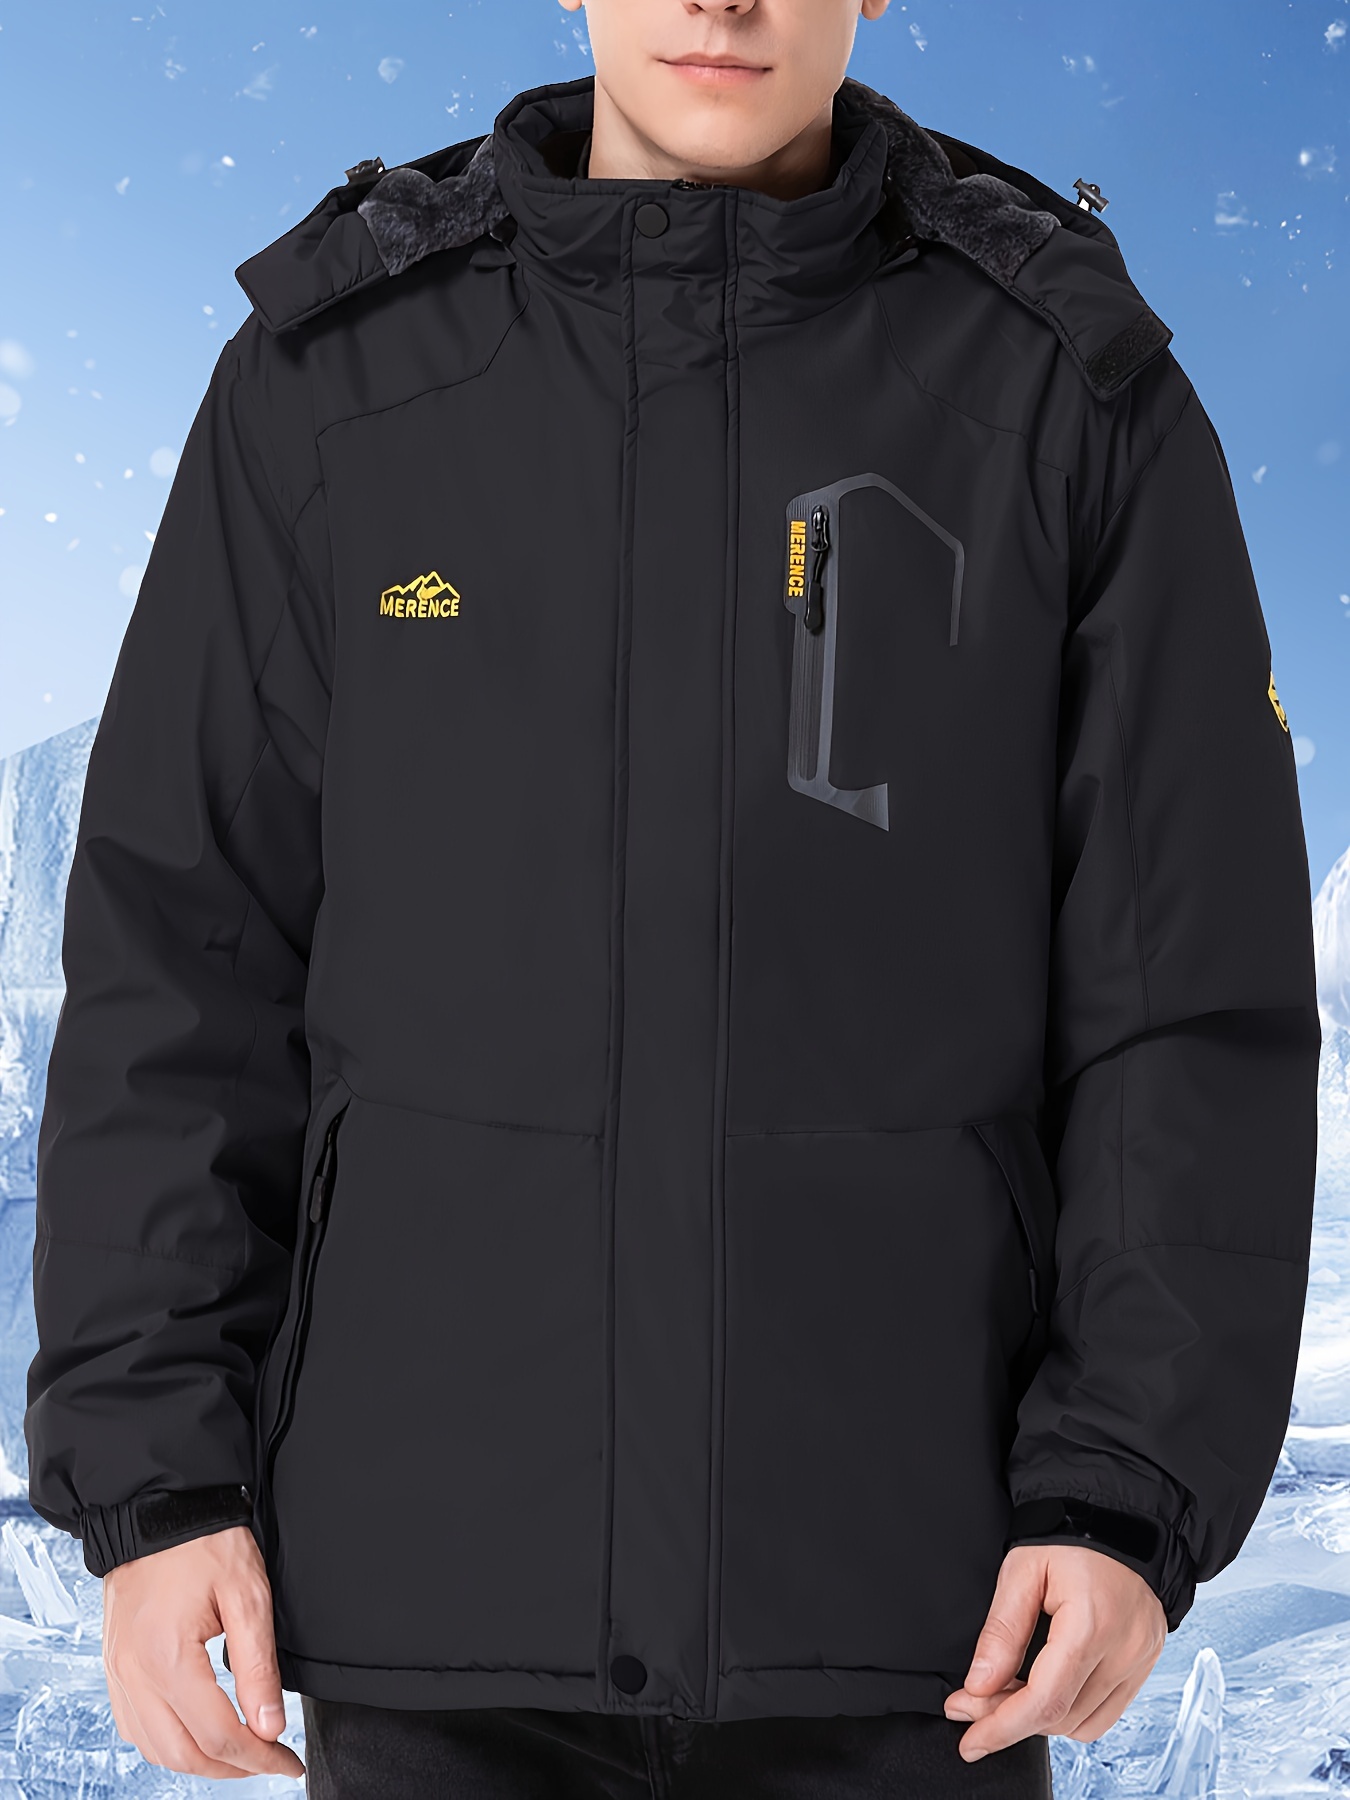 33,000ft Chaqueta de esquí impermeable 3 en 1 para hombre, chaqueta de  esquí cálida de montaña, chaqueta de lluvia para nieve, abrigo de invierno  con